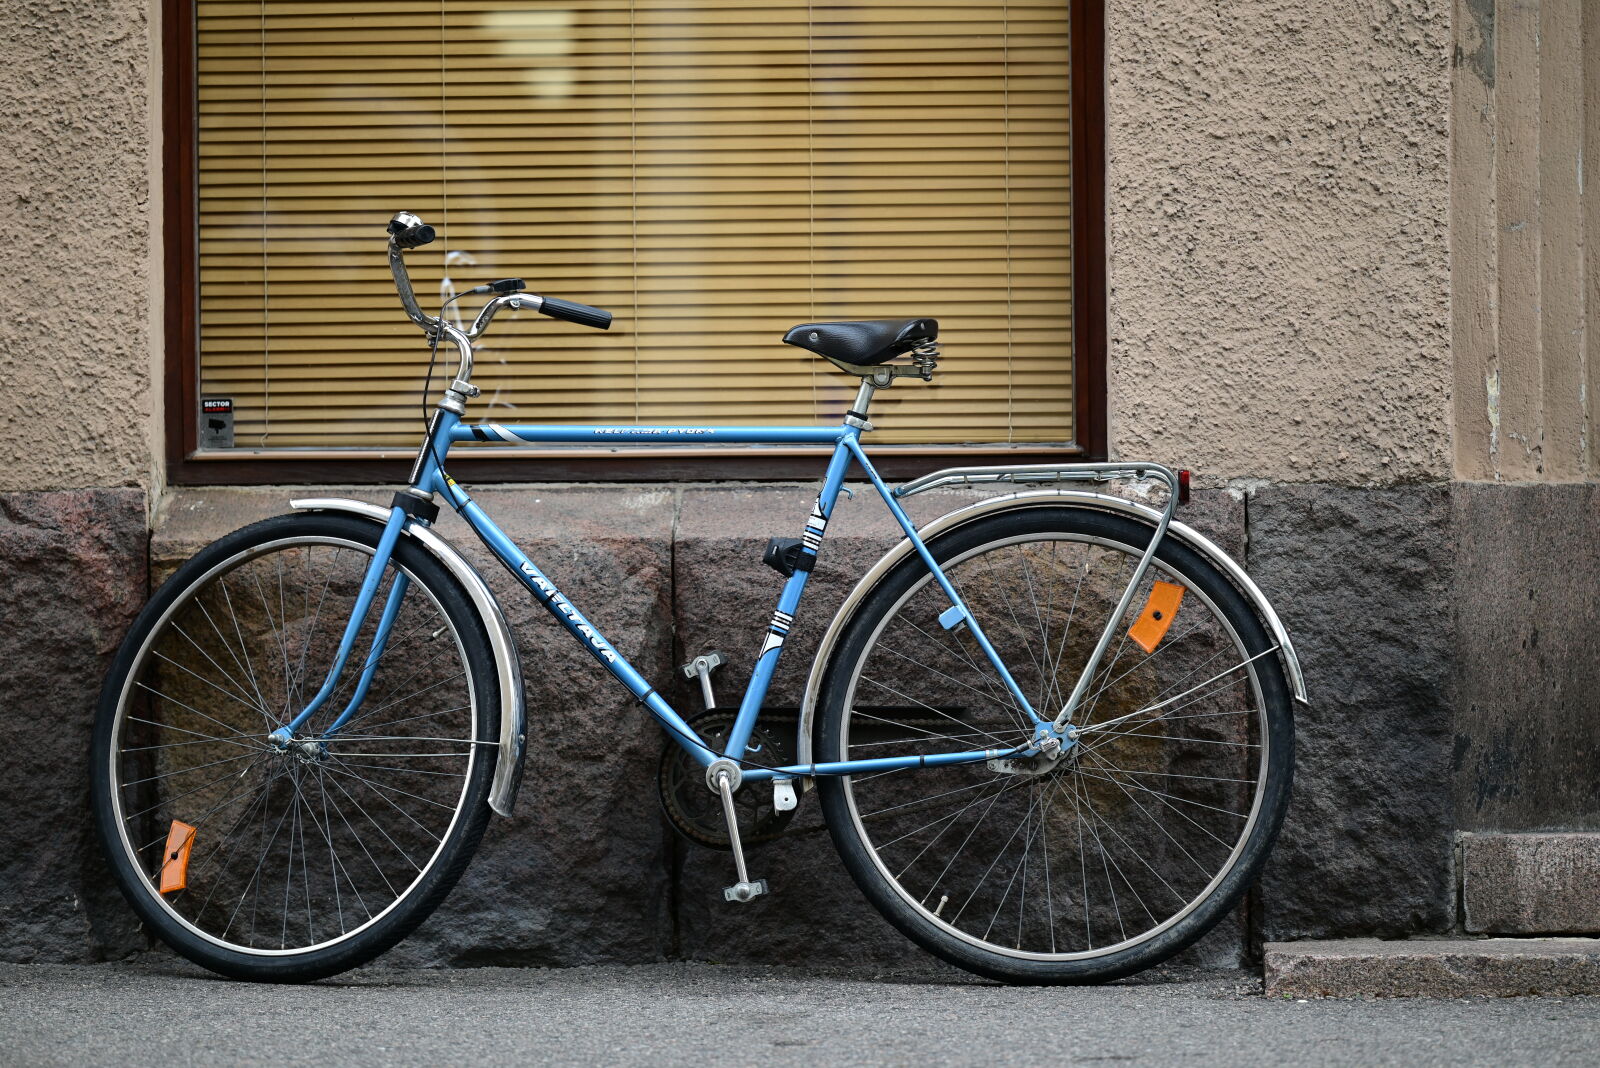 Nikon Z5 sample photo. Old bicycle photography